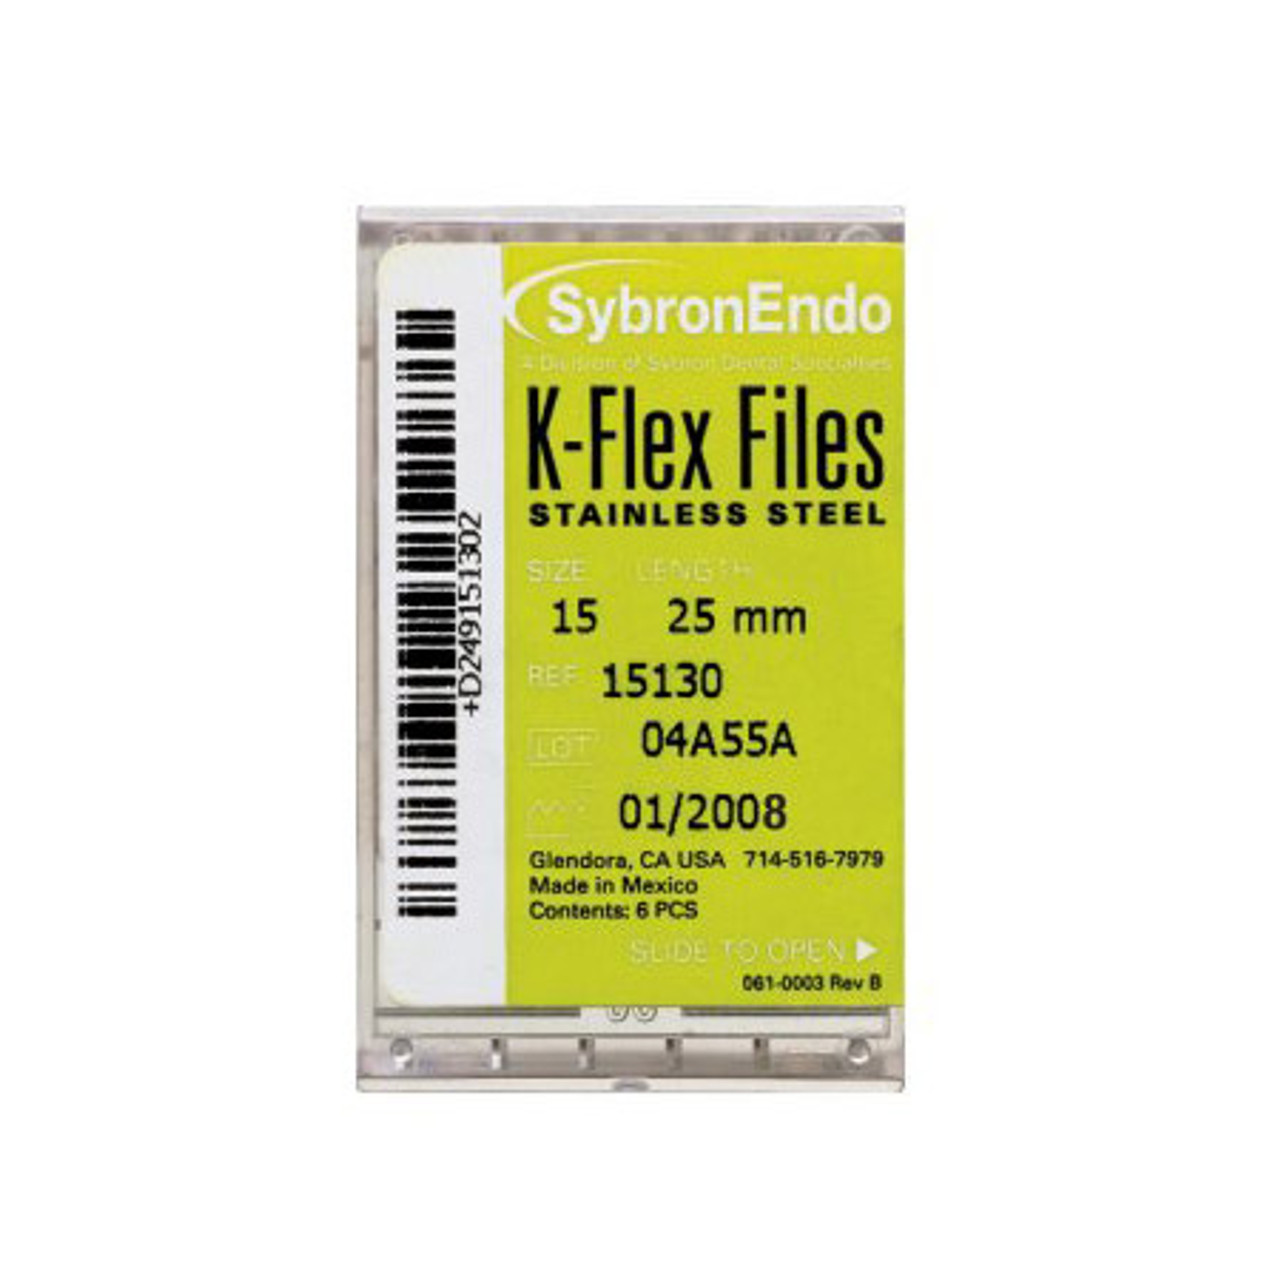 K-Flex Files 21mm #20 6/Bx